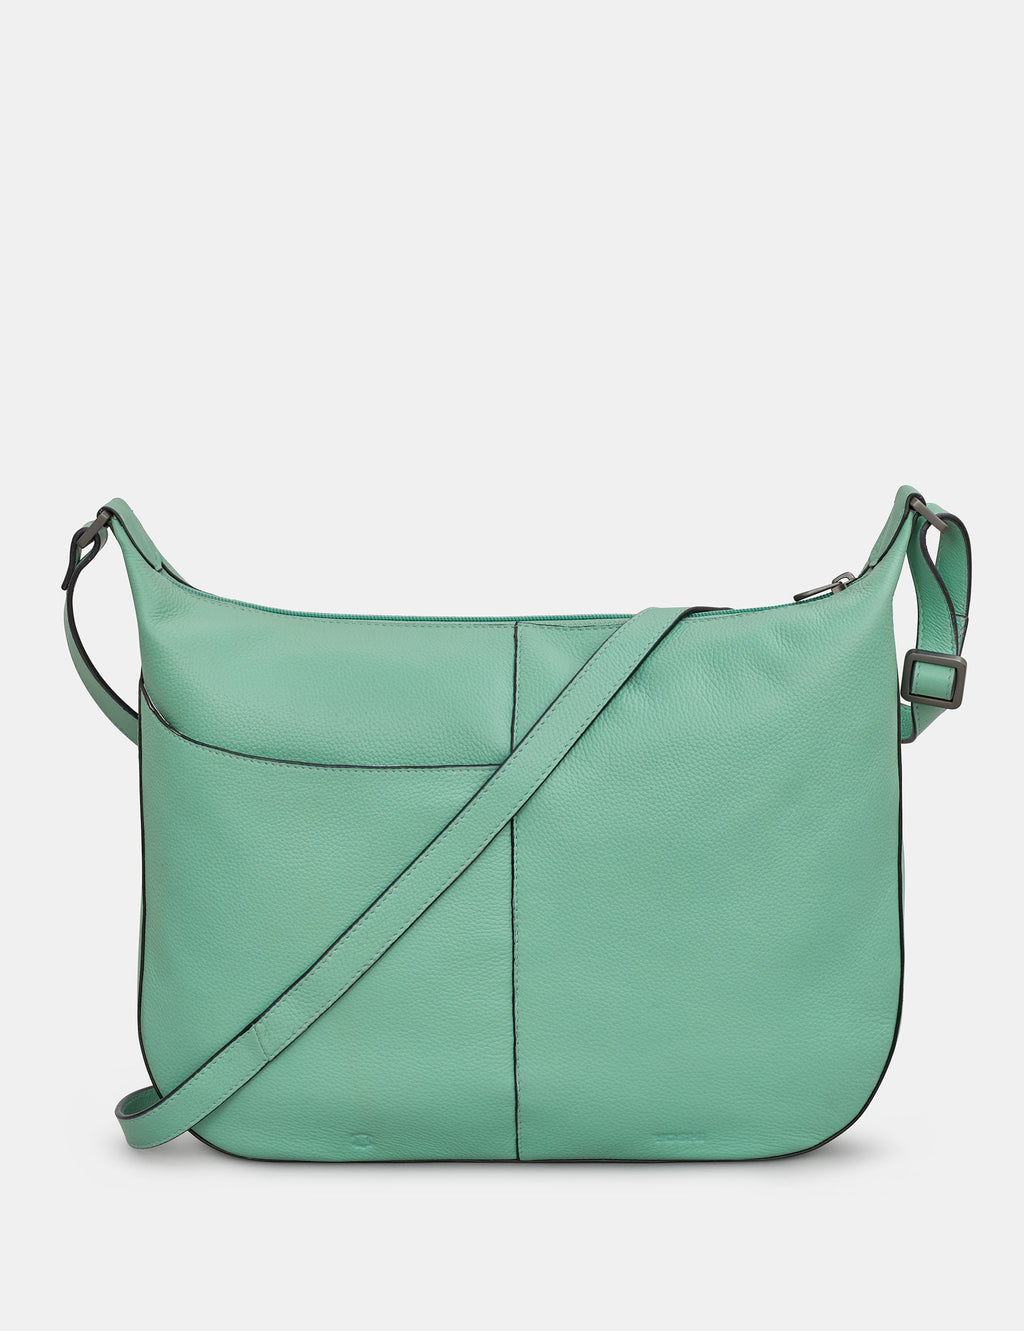 Yoshi - Mint Green Zebra Leather Hobo Bag